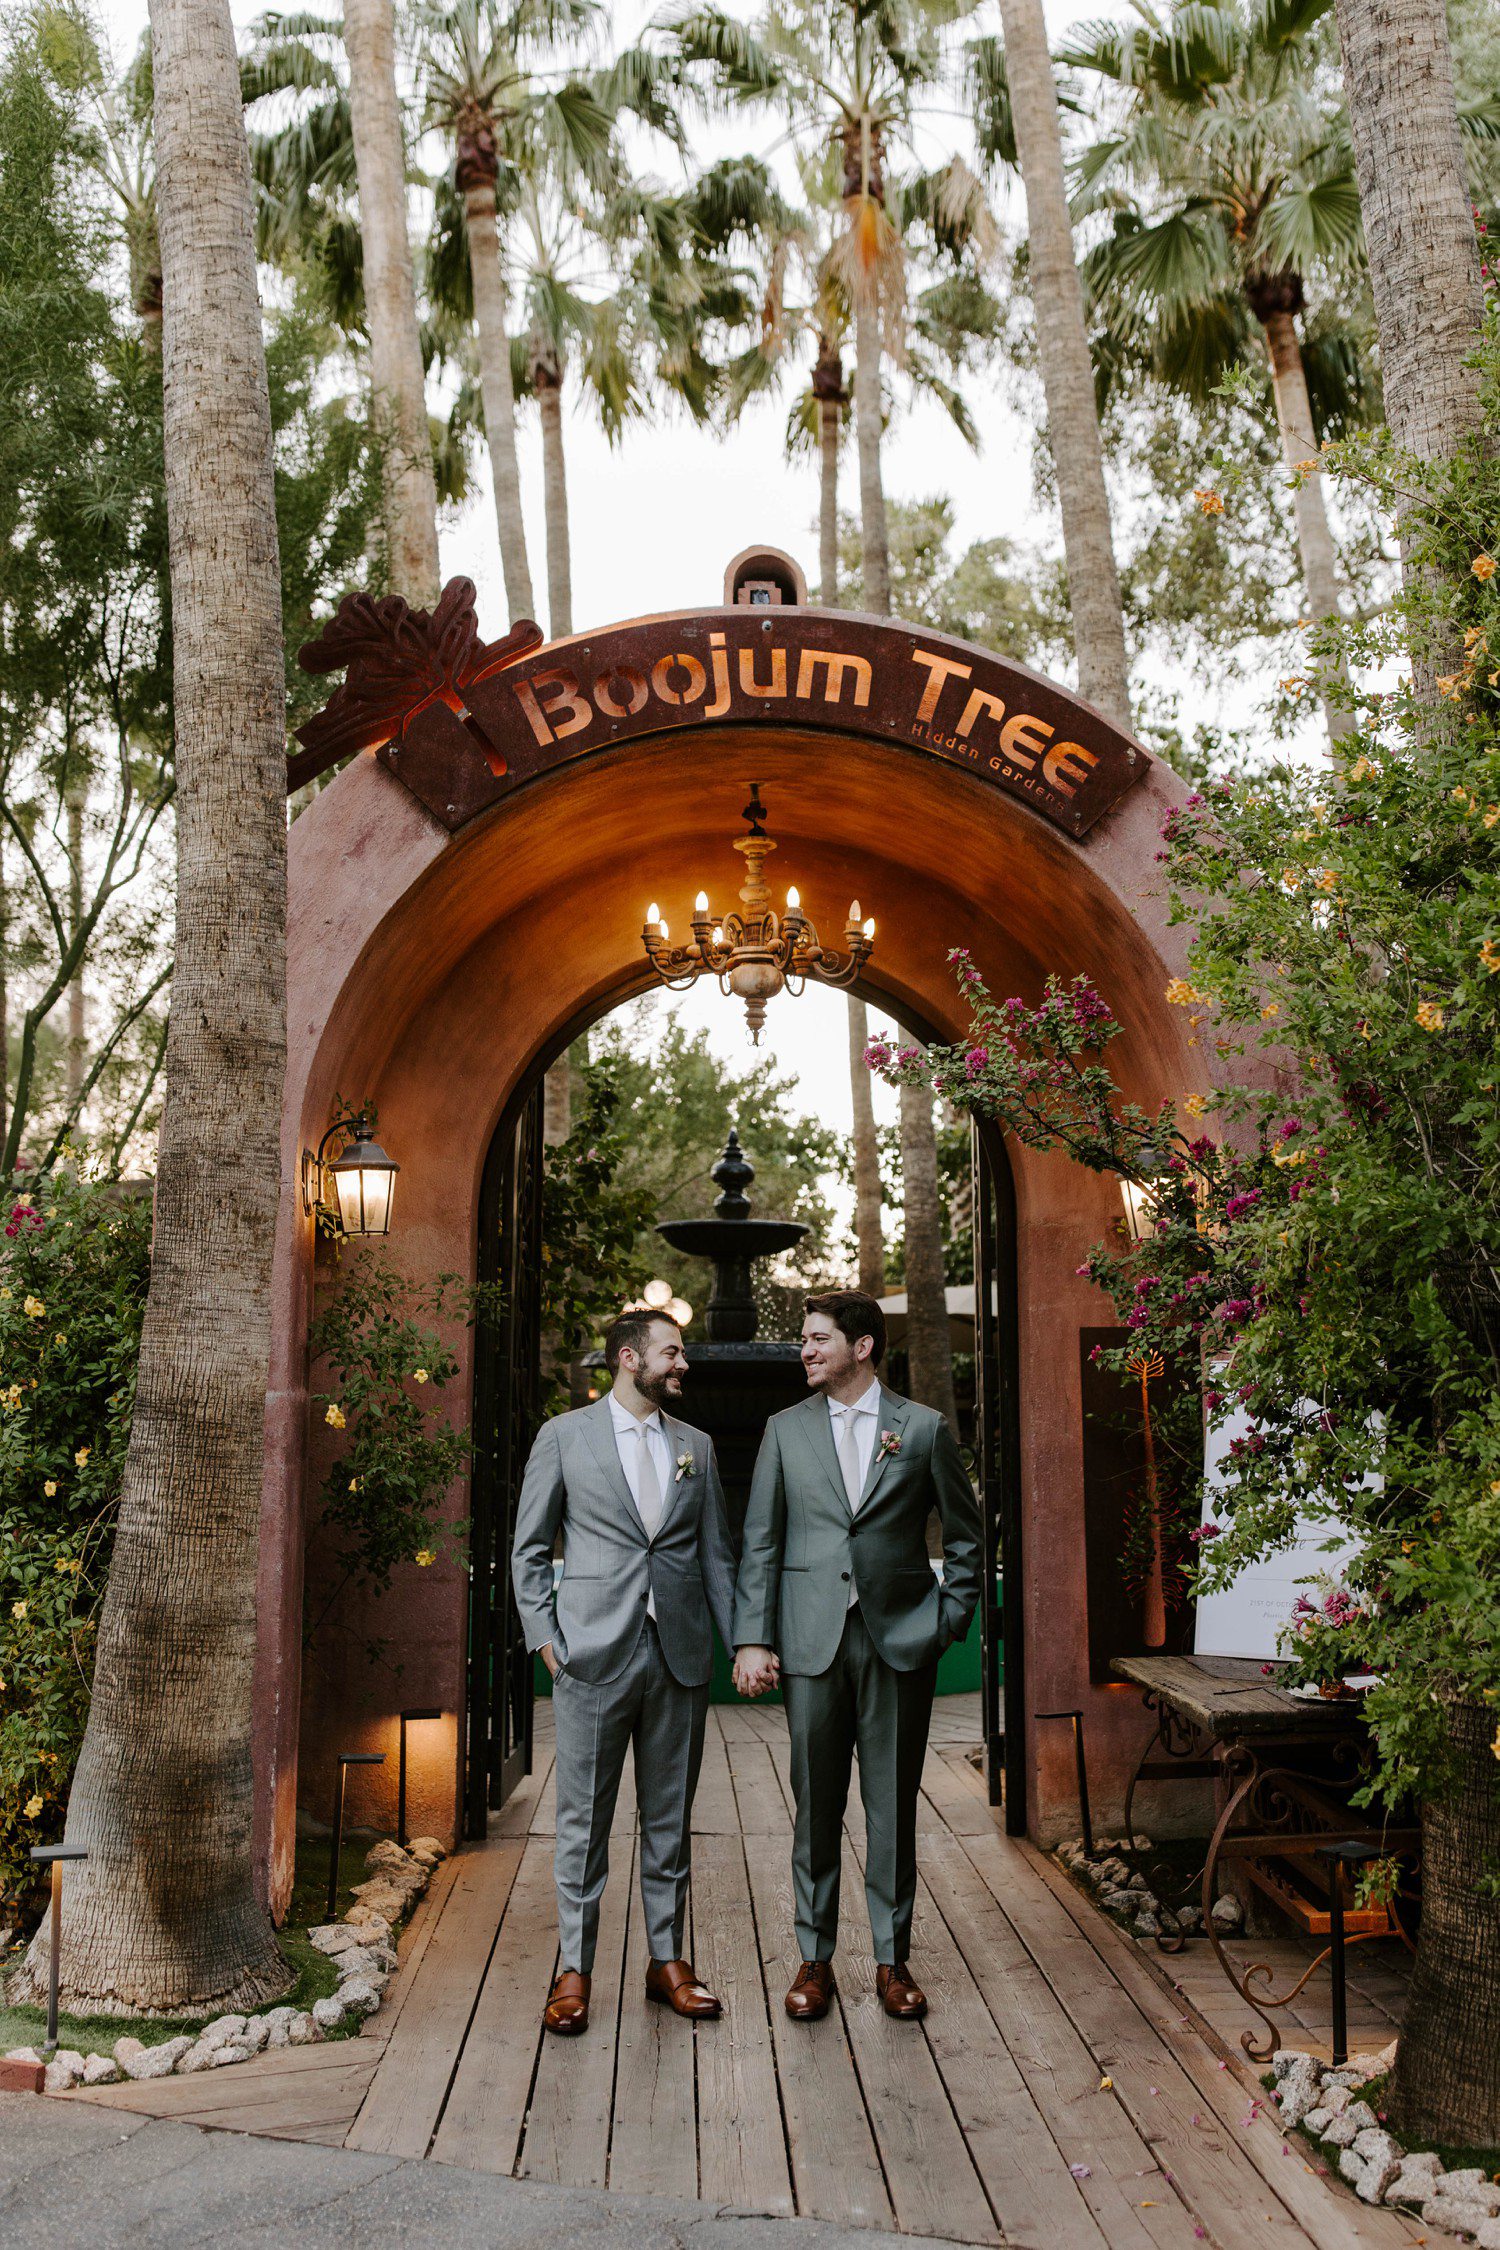 Two groom wedding photos at Boojum Tree in Phoenix.